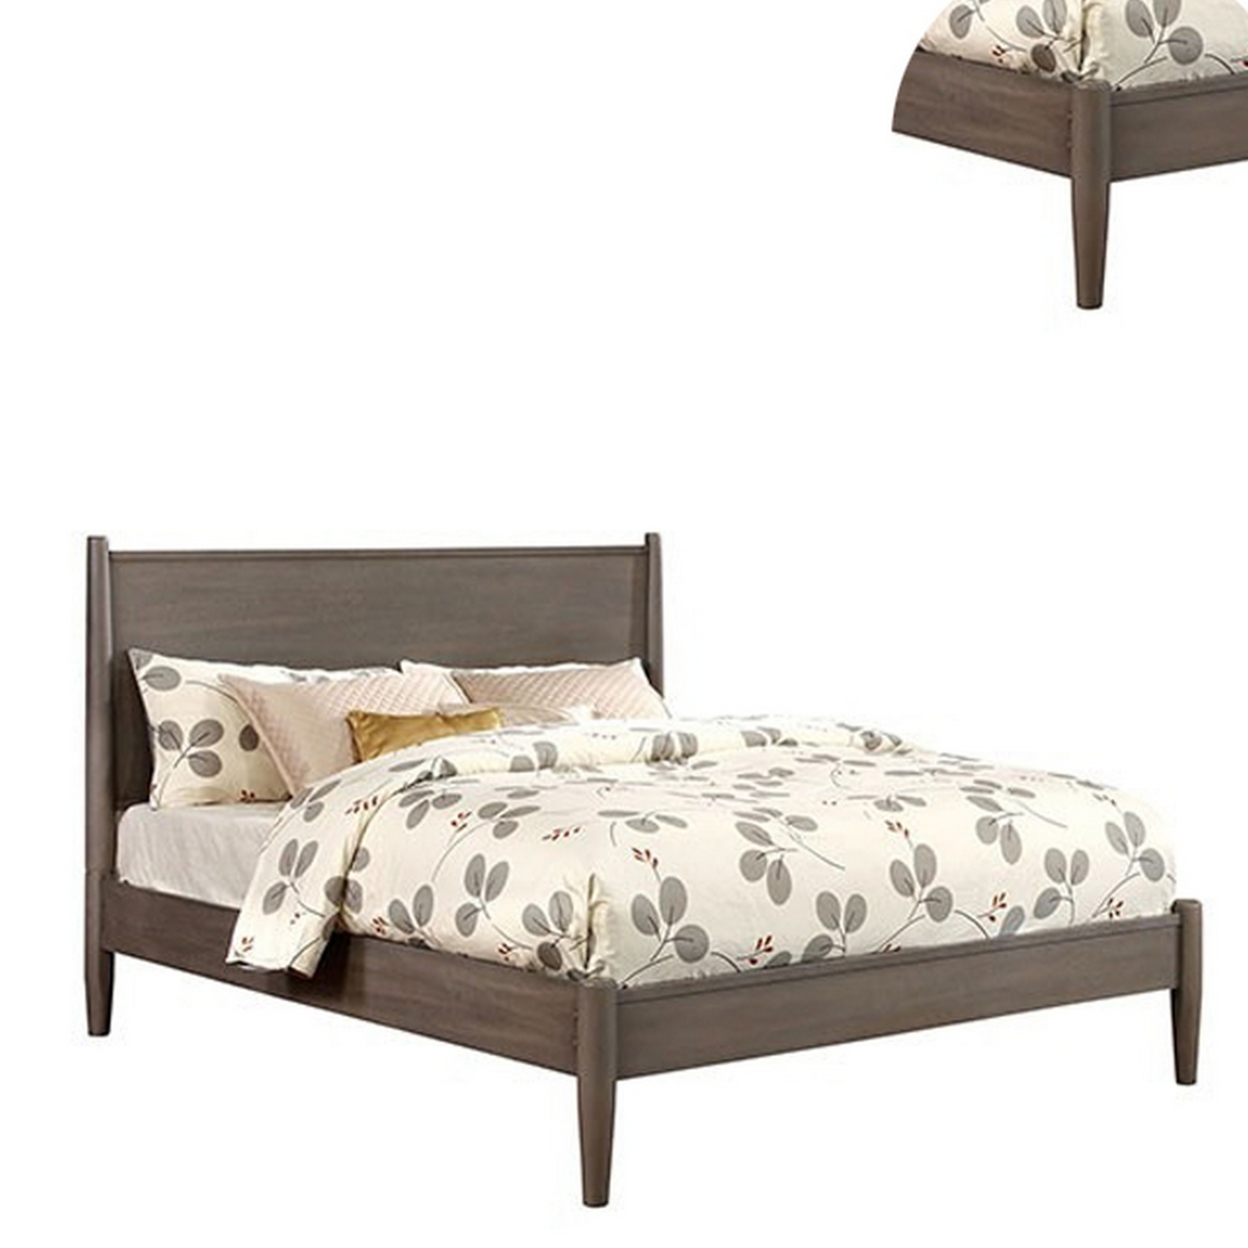 Wooden Eastern King Size Bed With Panel Headboard, Gray- Saltoro Sherpi